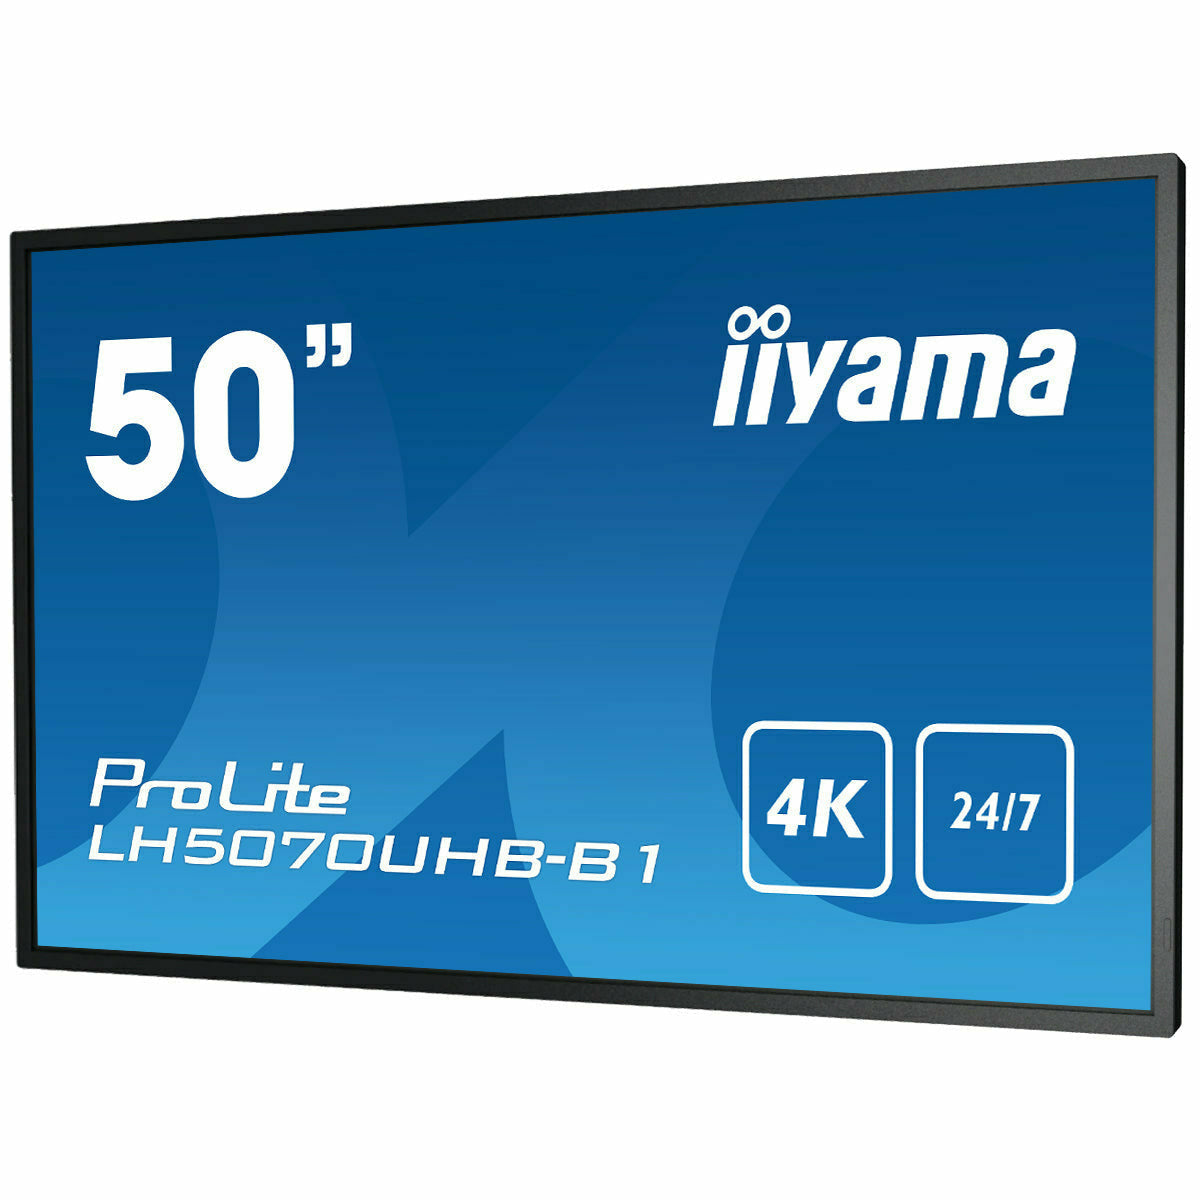 iiyama ProLite LH5070UHB-B1 50" Large Format Display with 24/7, 4K UHD, Android 9.0 and 700cd/m² High Brightness